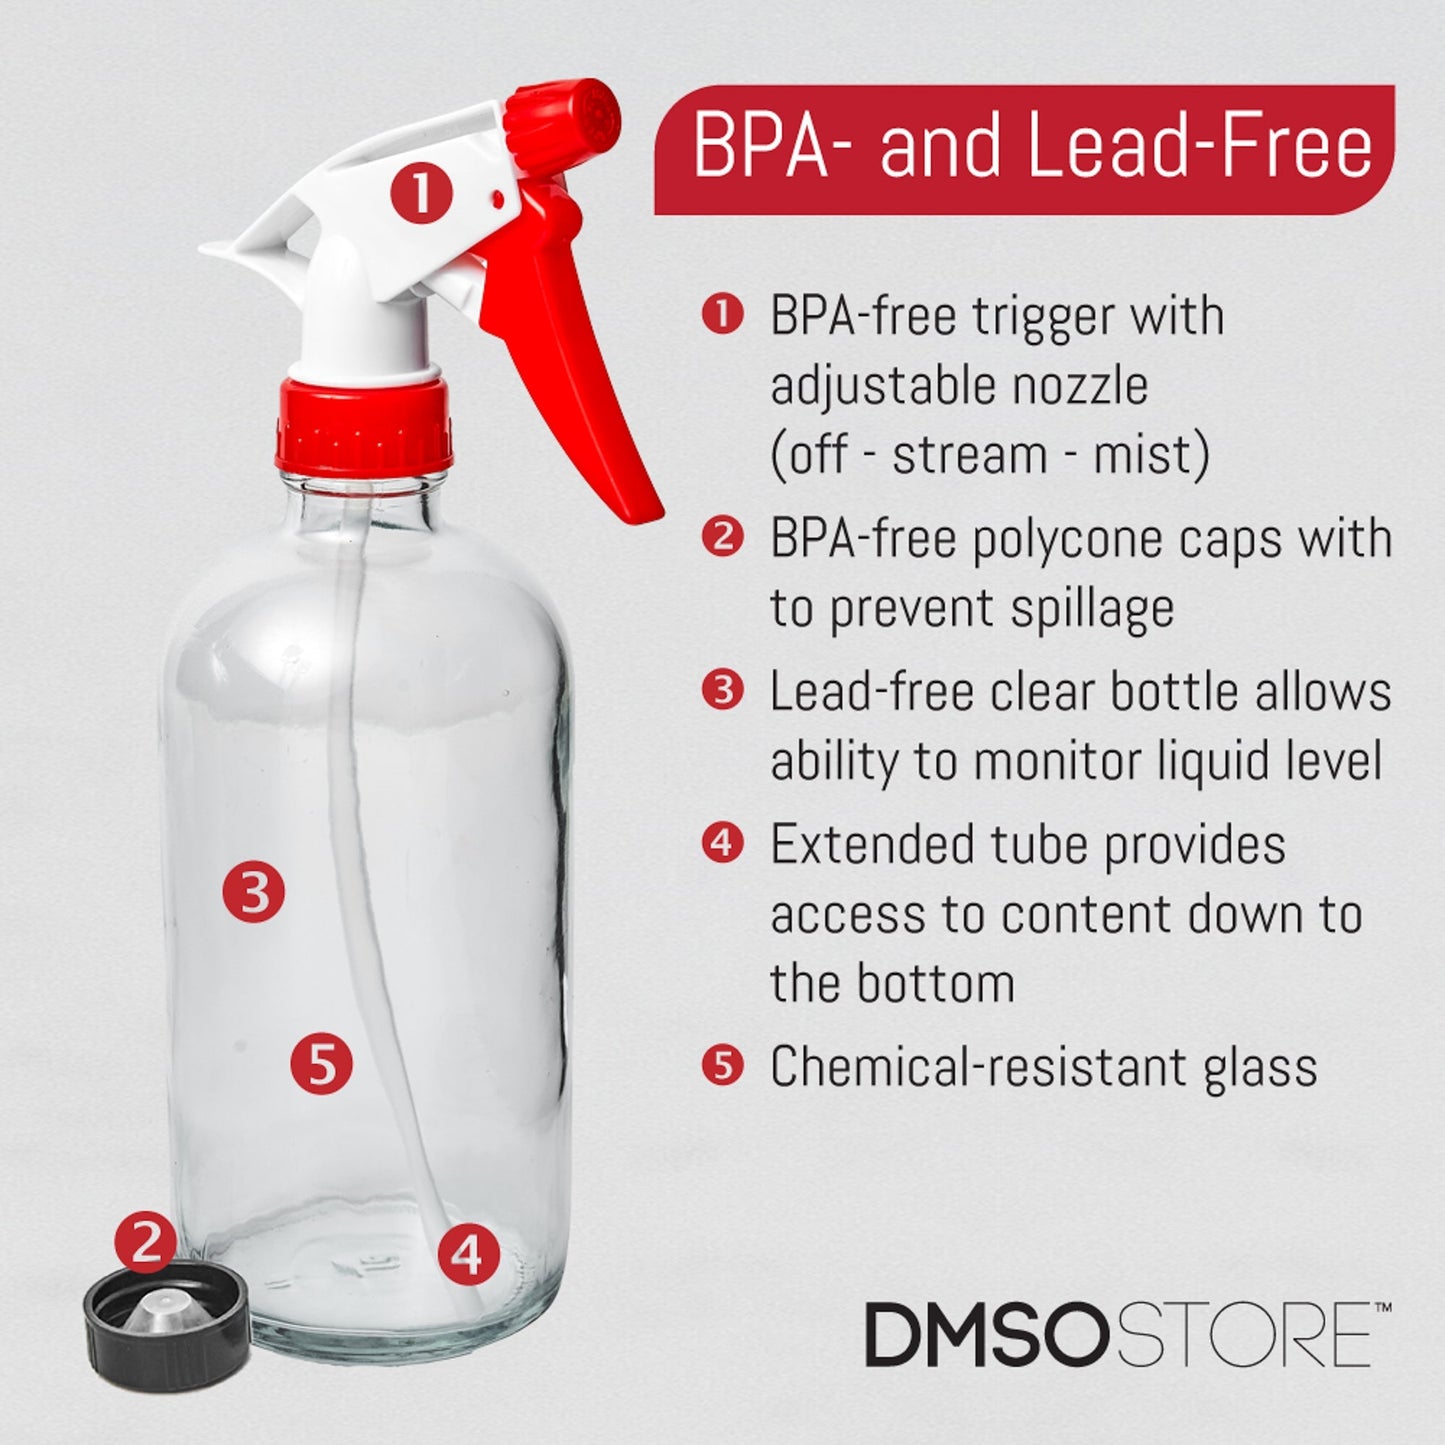 Glass Spray Bottles (8 oz.) with Red trigger sprayer 9 CT - dmsostore